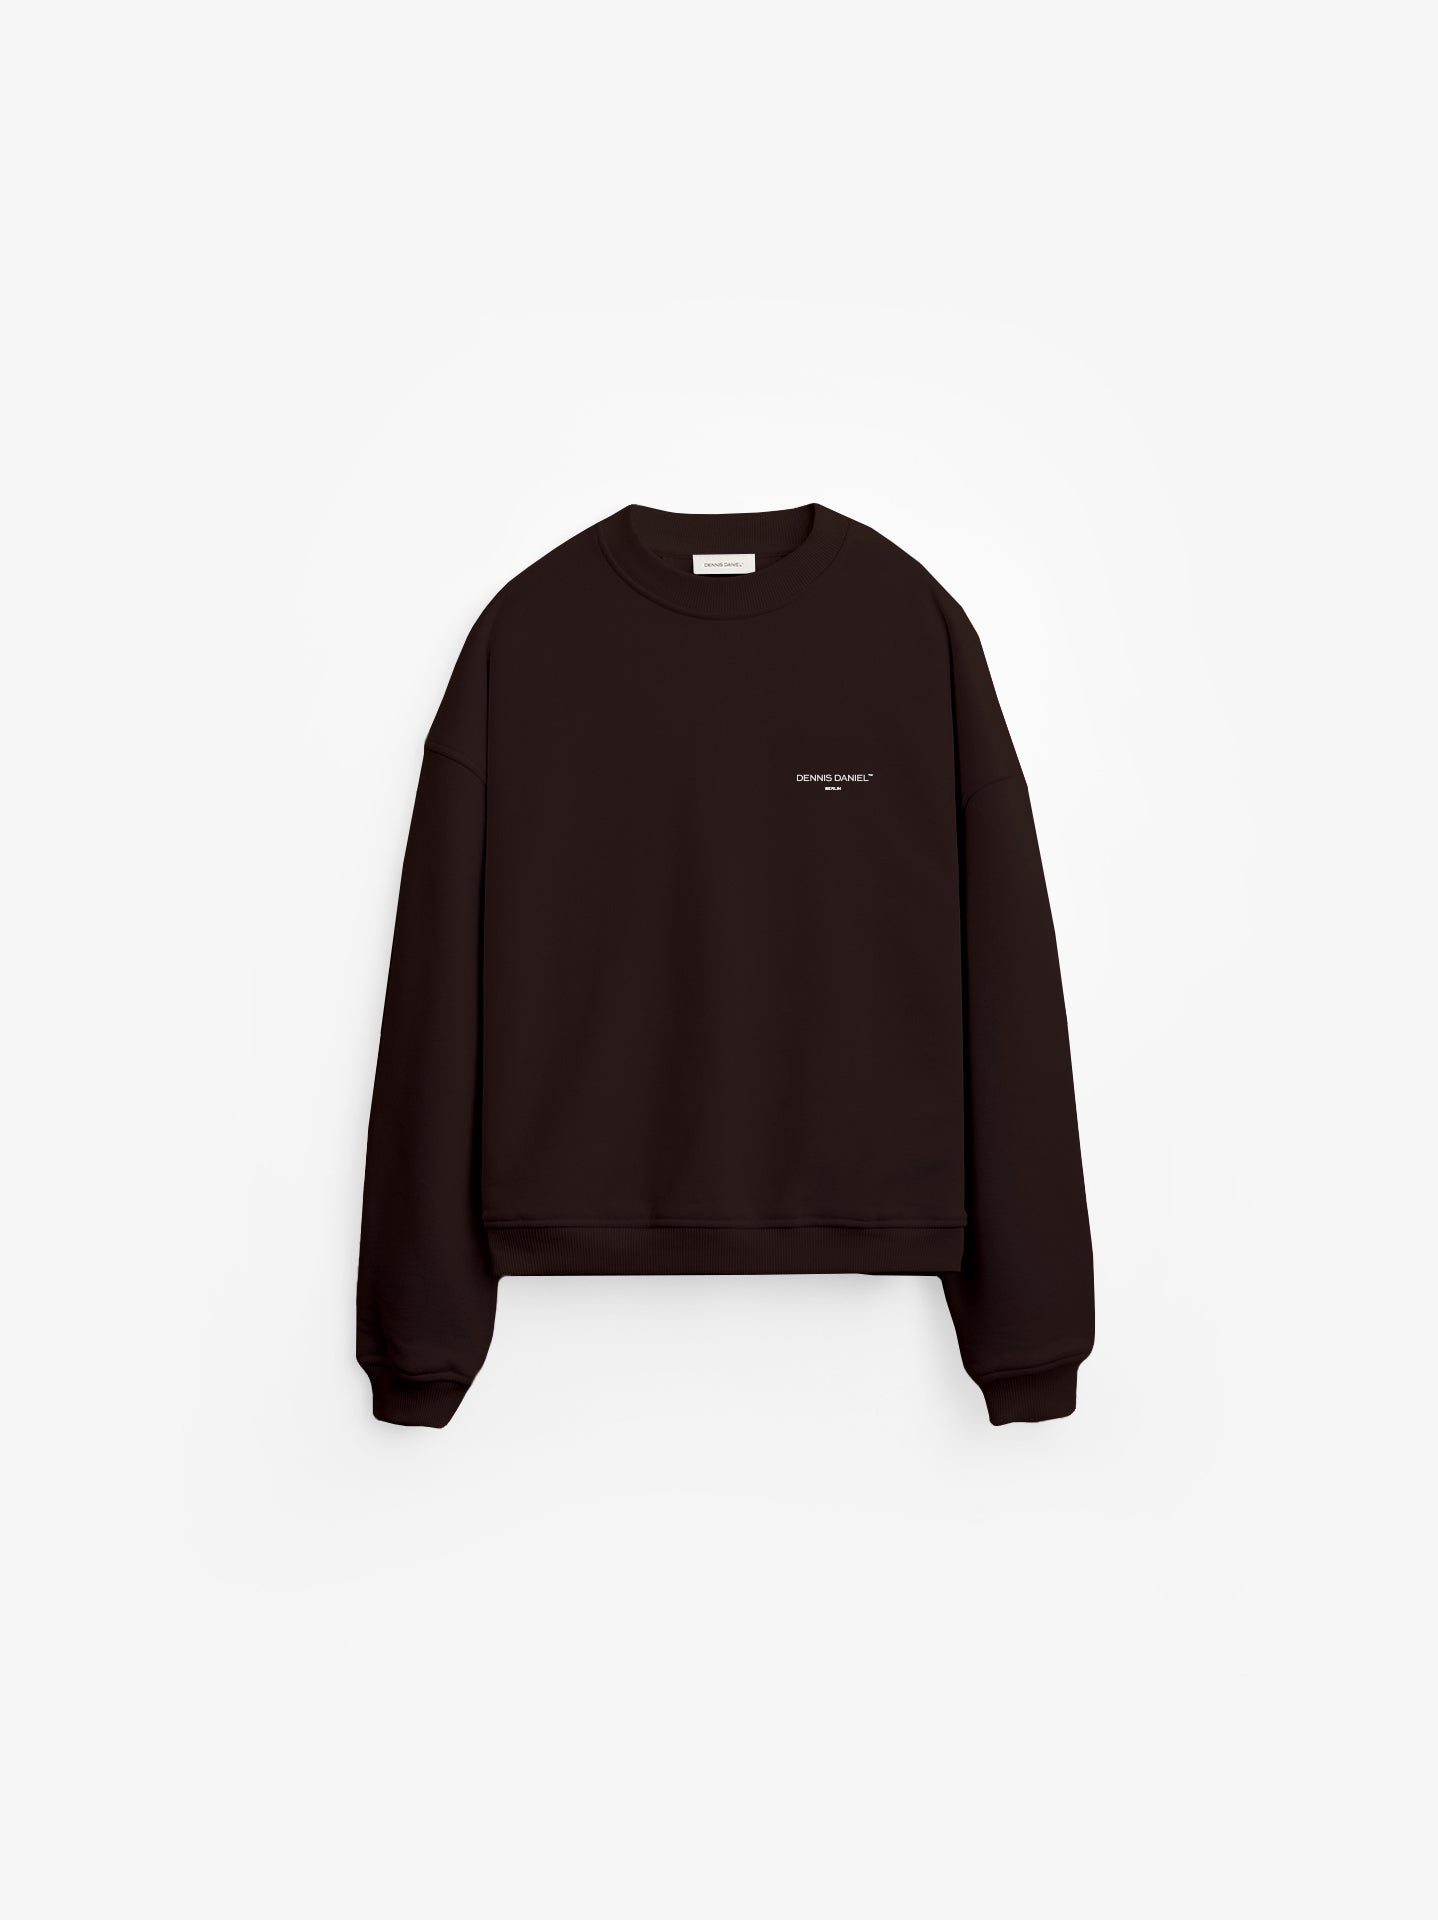 Contemporary Elegance Sweater - Dark Oak